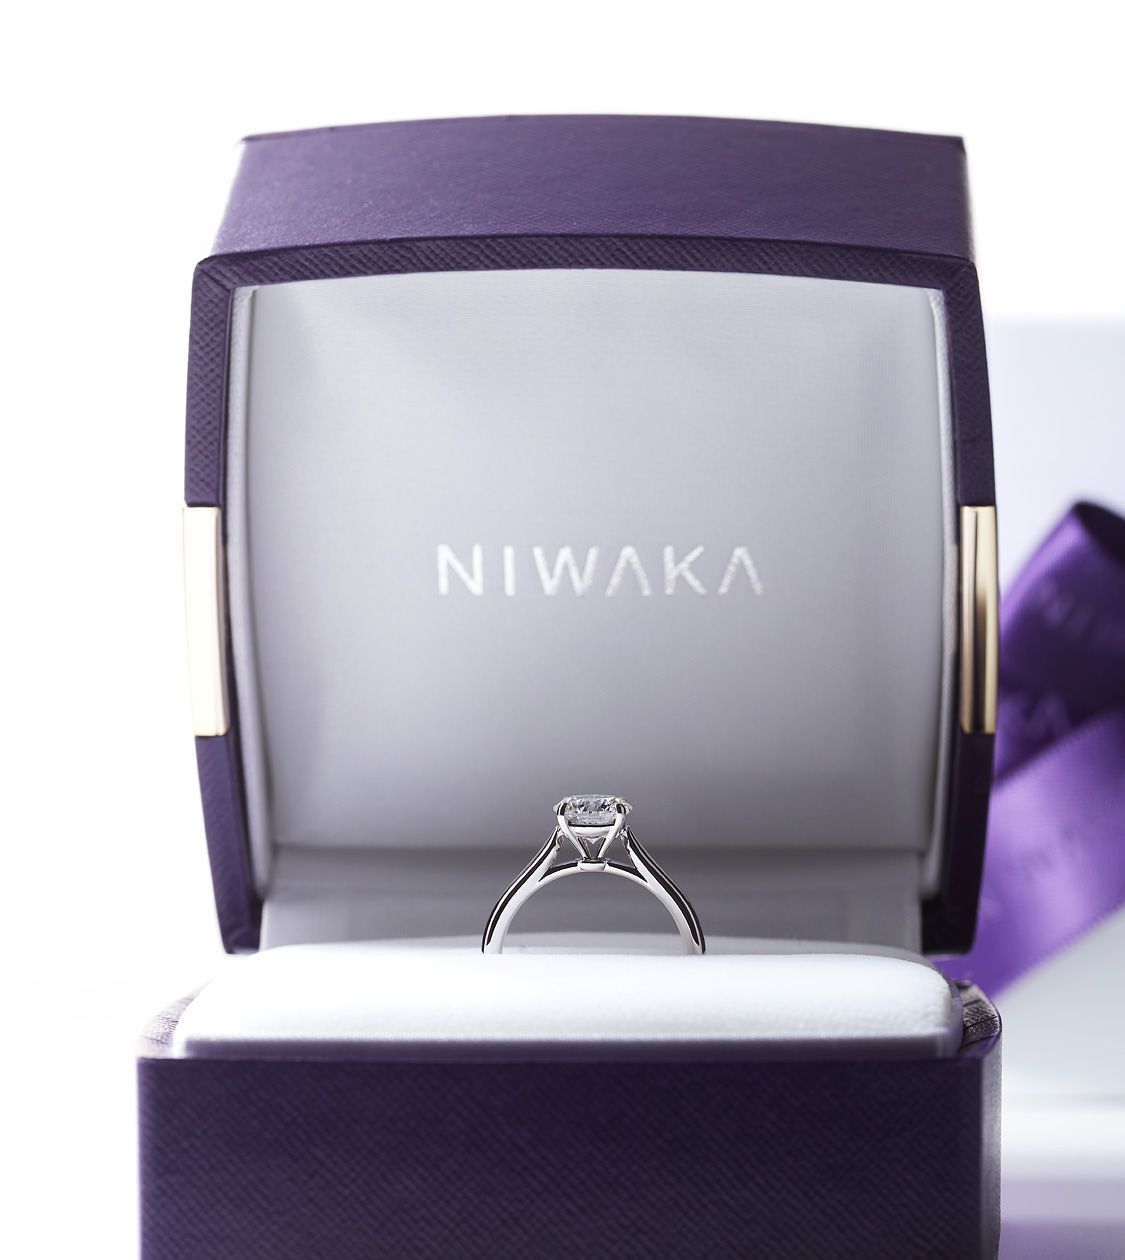 NIWAKAを象徴する紫と白のケース